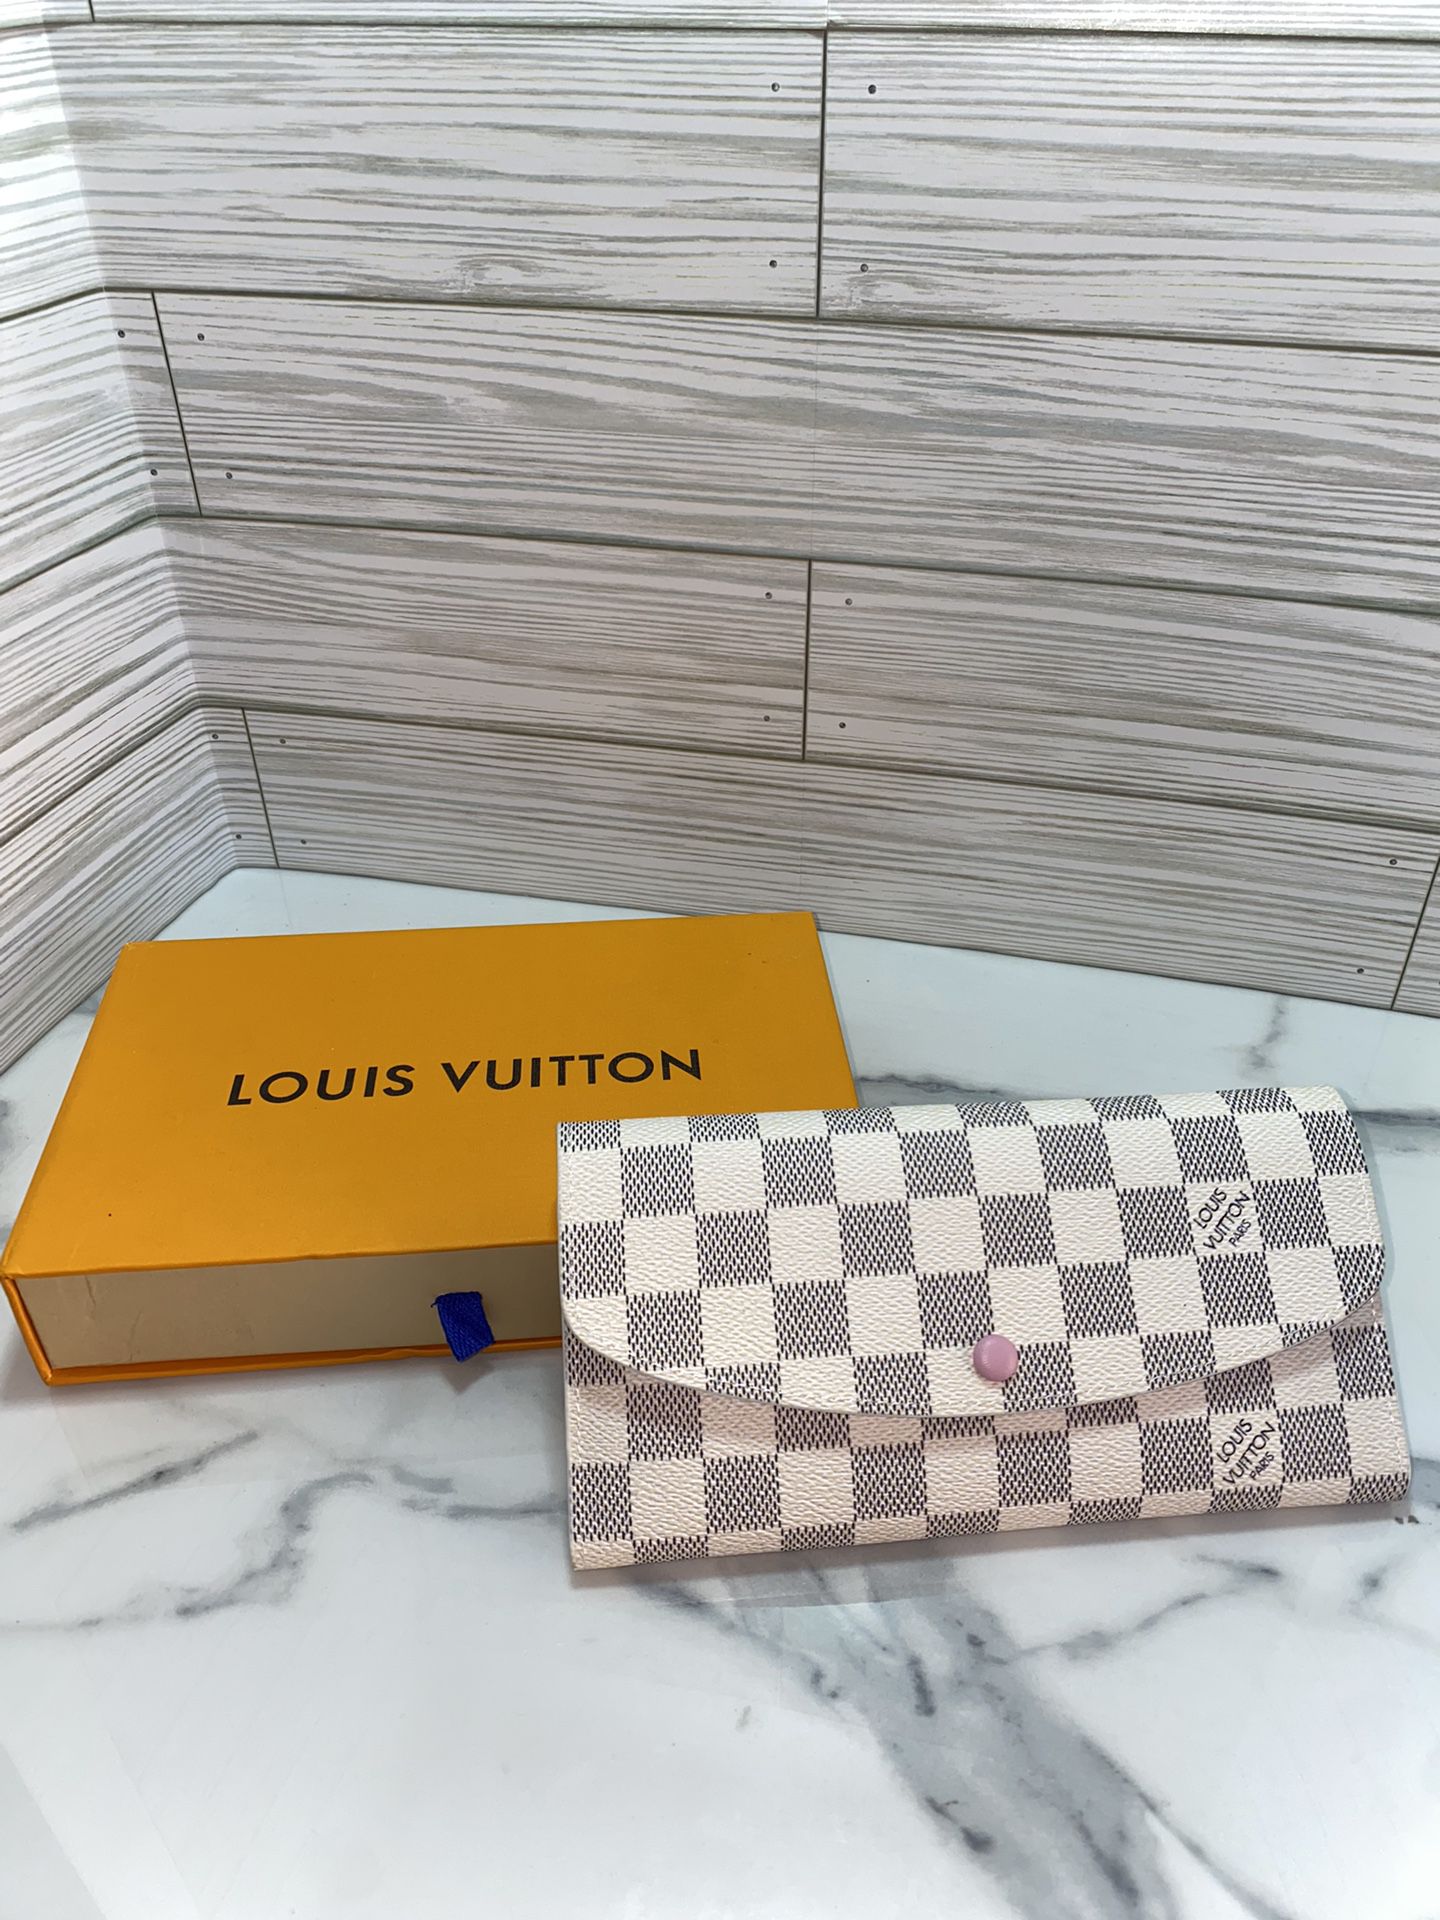 Louis Vuitton Victorine Wallet for Sale in San Fernando, CA - OfferUp